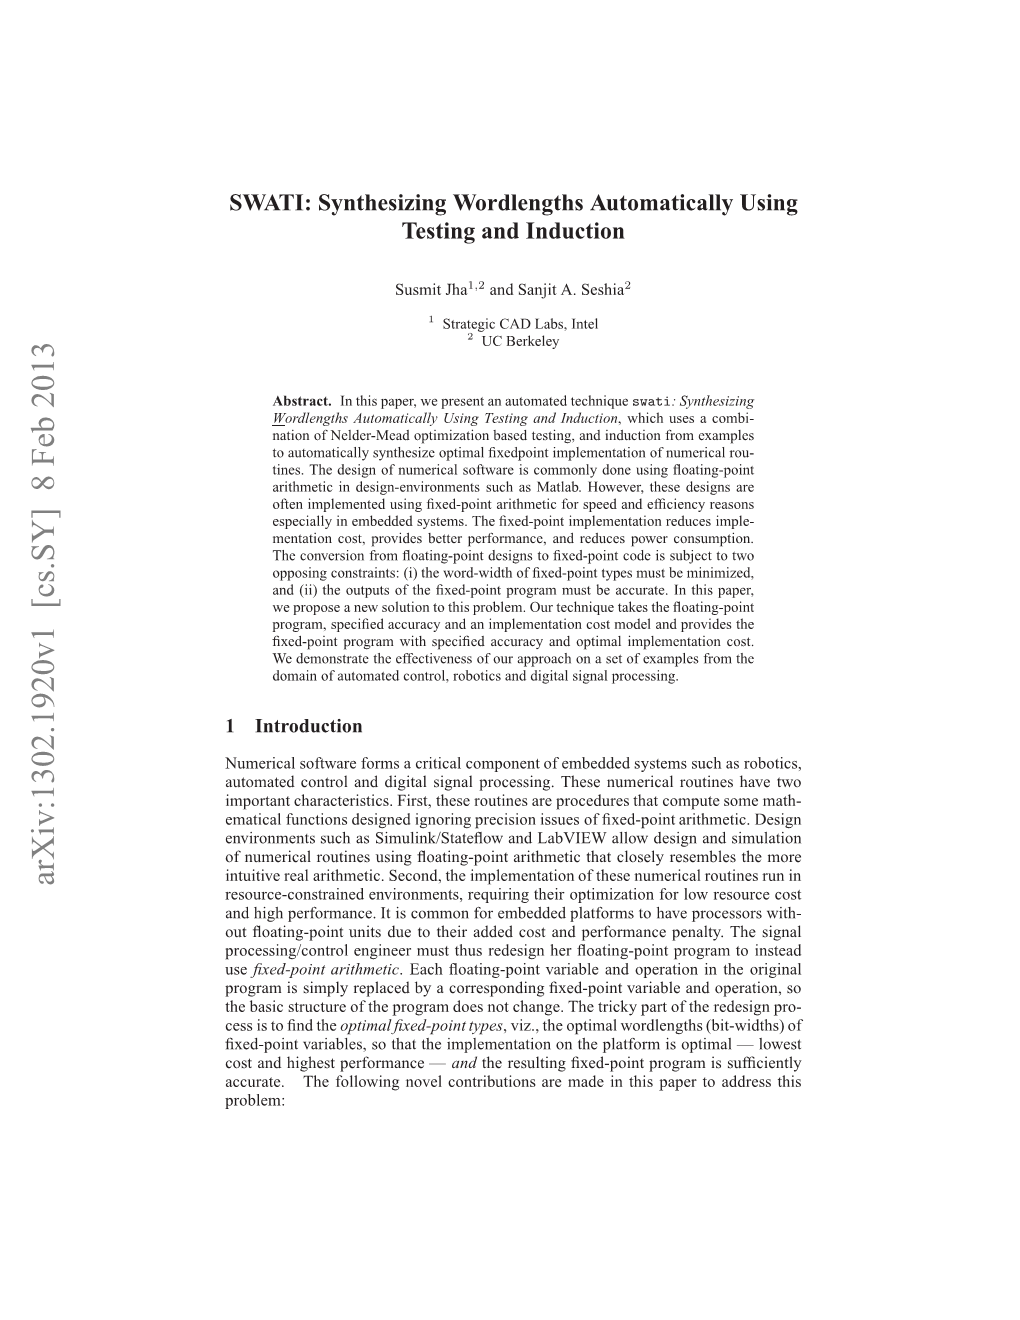 SWATI: Synthesizing Wordlengths Automatically Using Testing and Induction